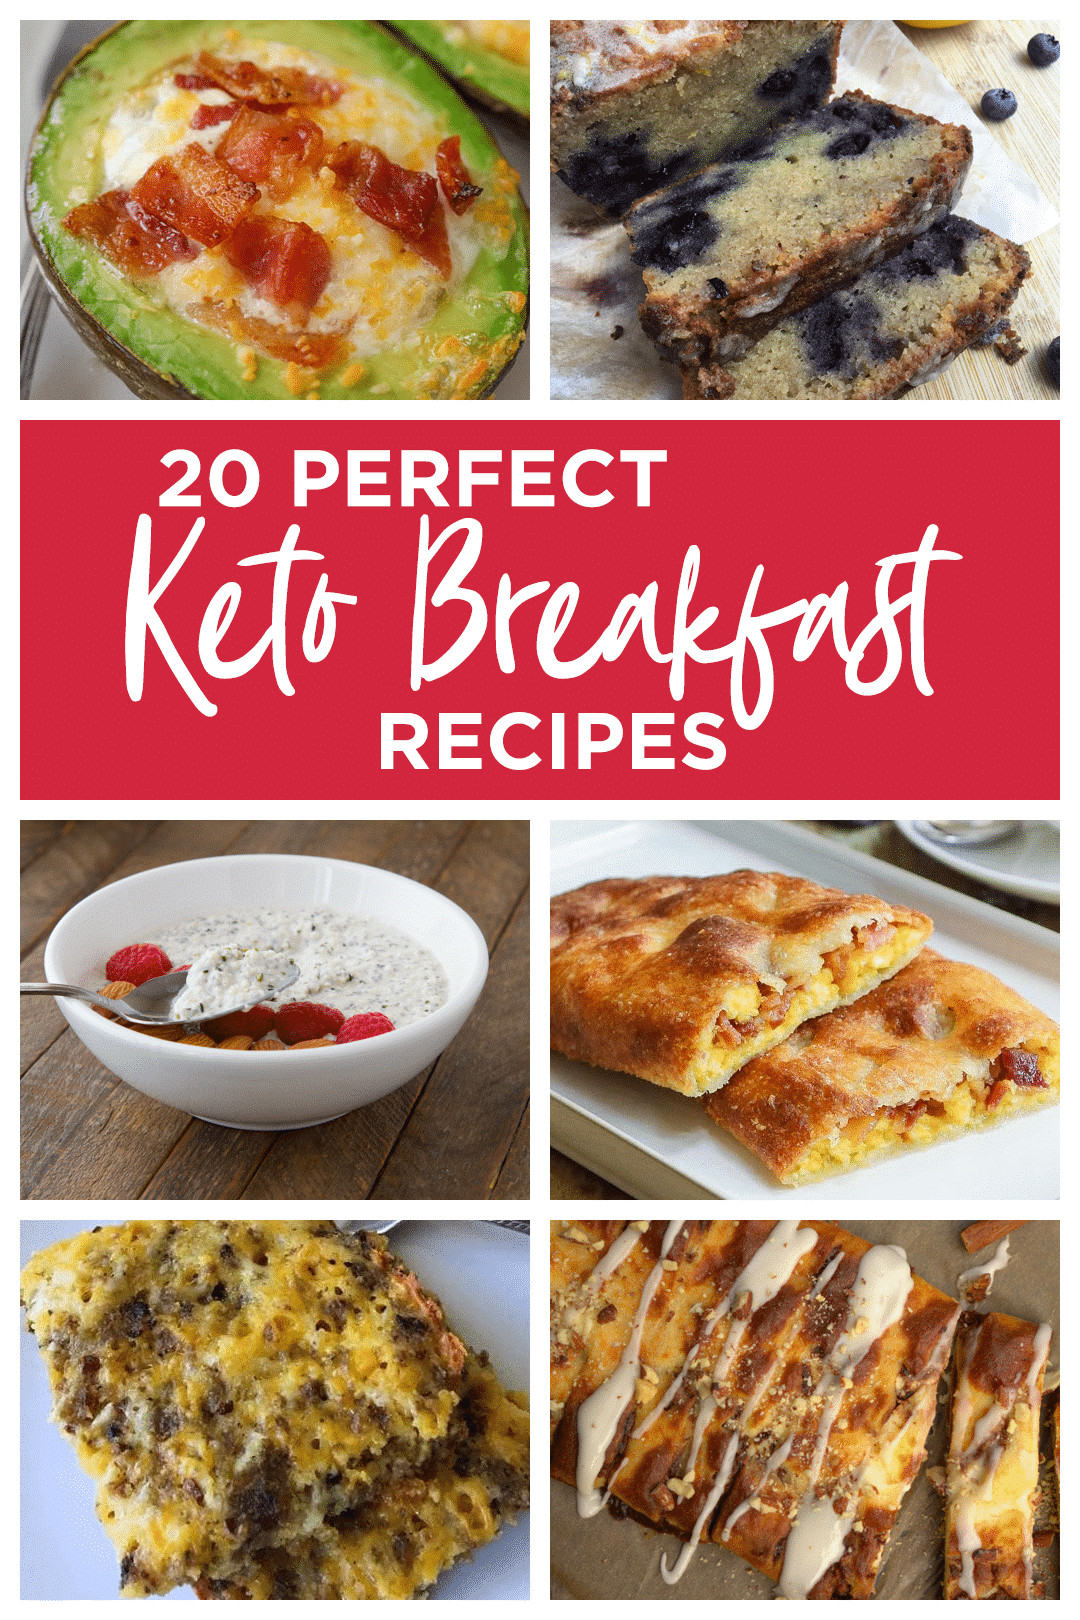 Keto Video Recipes Breakfast
 Keto Blueberry French Toast Casserole